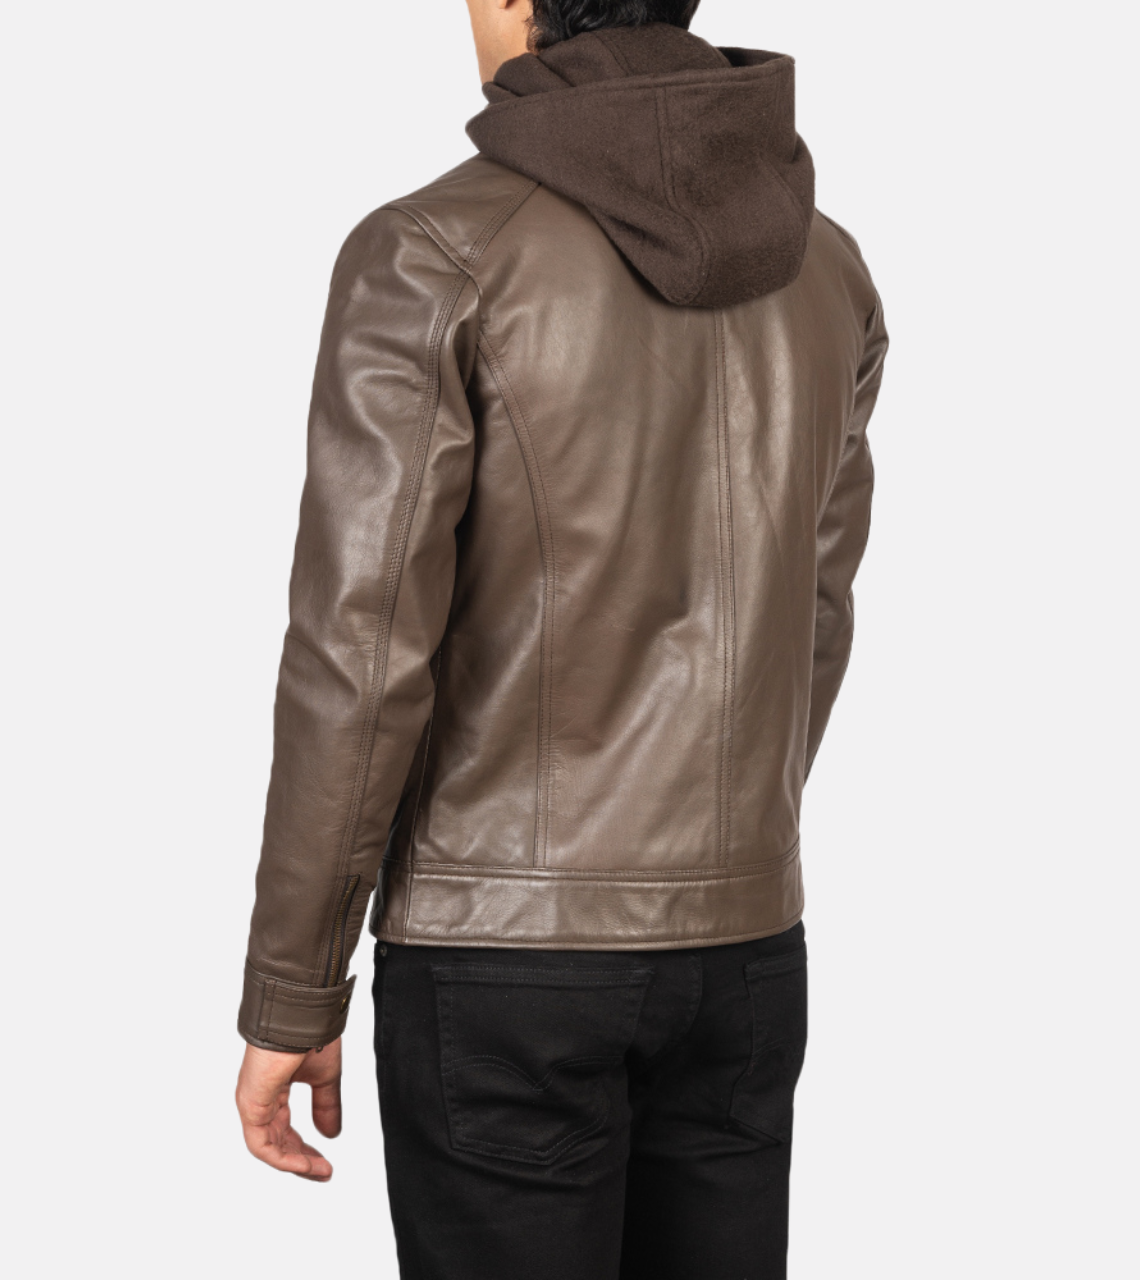  Traversay Hooded Men's Biker Leather Jacket  Back